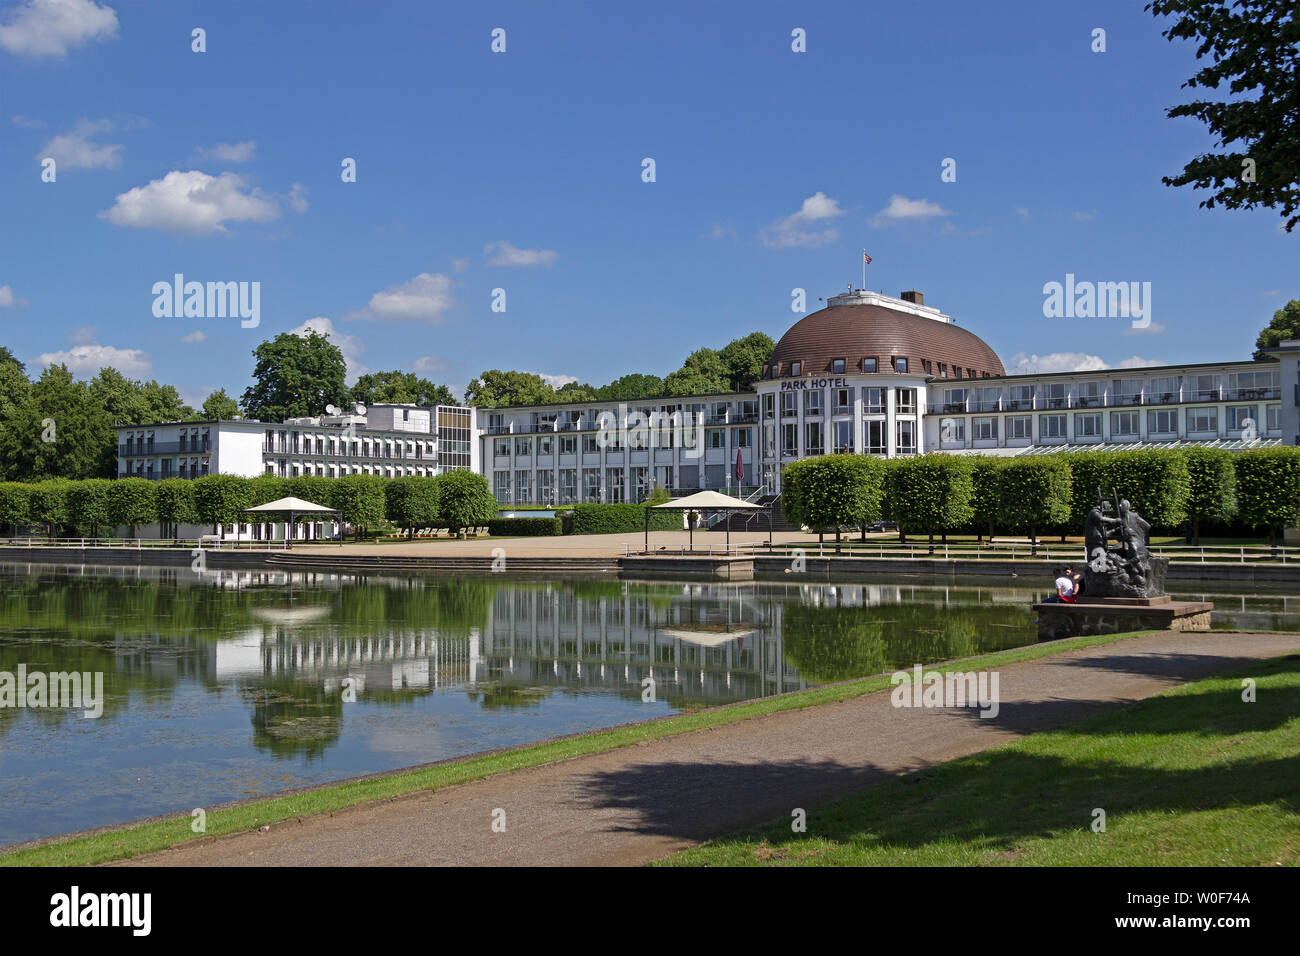 Dorint Park Hotel, Buergerpark, Bremen, Germany Stock Photo